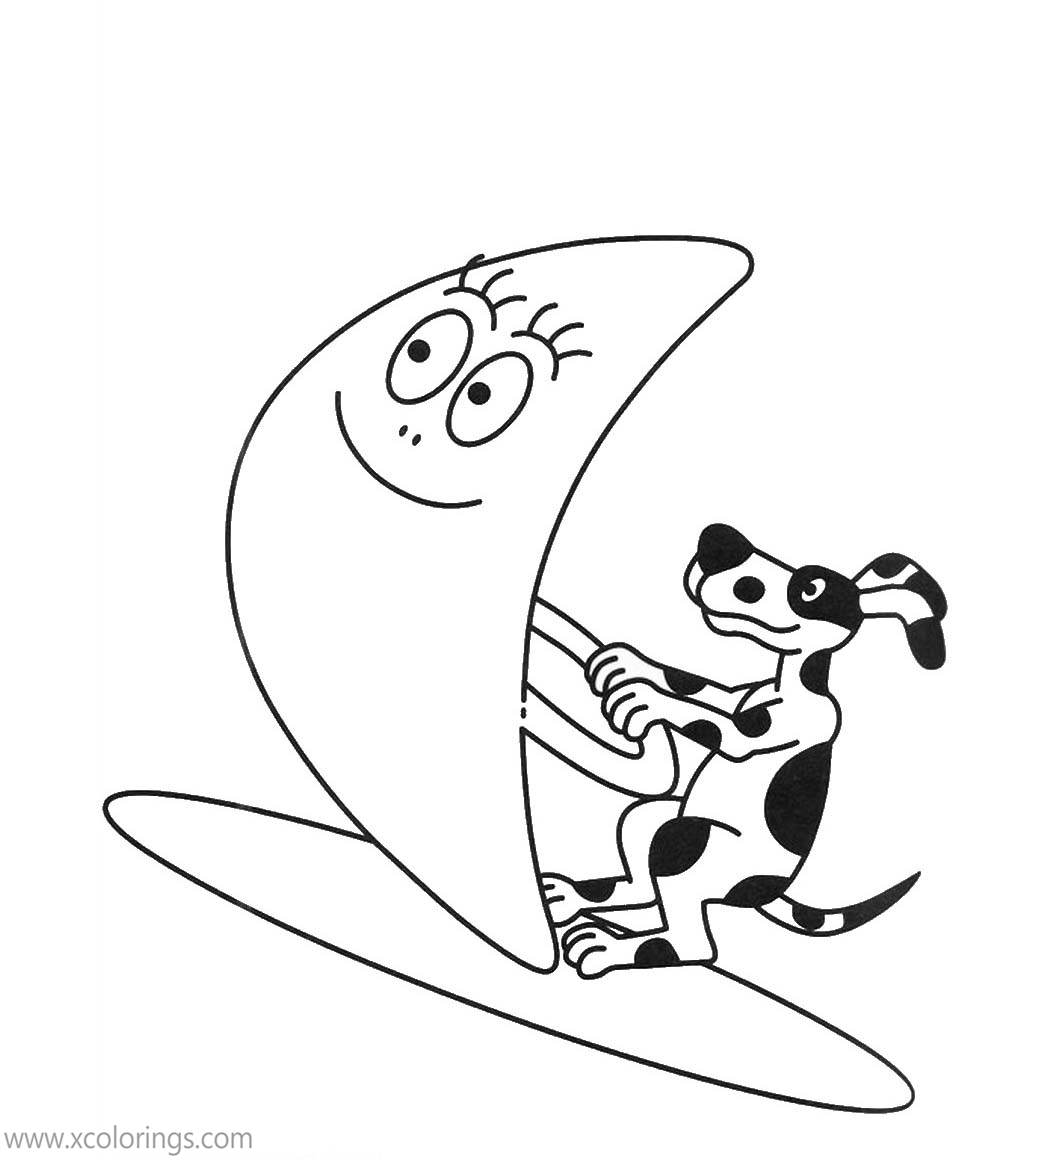 Free Barbapapa Coloring Pages Dog is Sailing printable